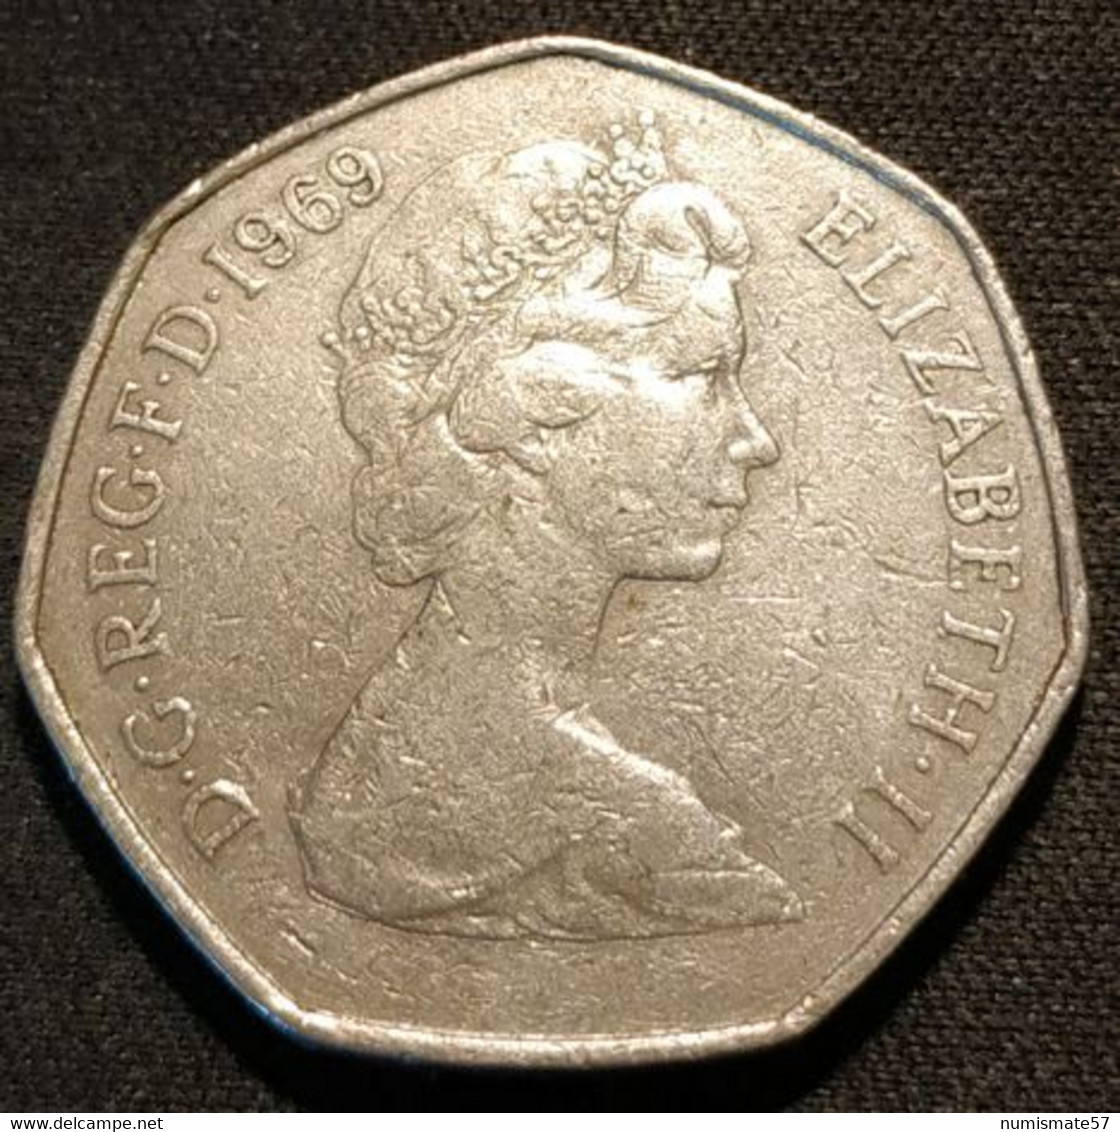 GRANDE BRETAGNE - 50 NEW PENCE 1969 - Elizabeth II - 2e Effigie - KM 913 - Great Britain - 50 Pence